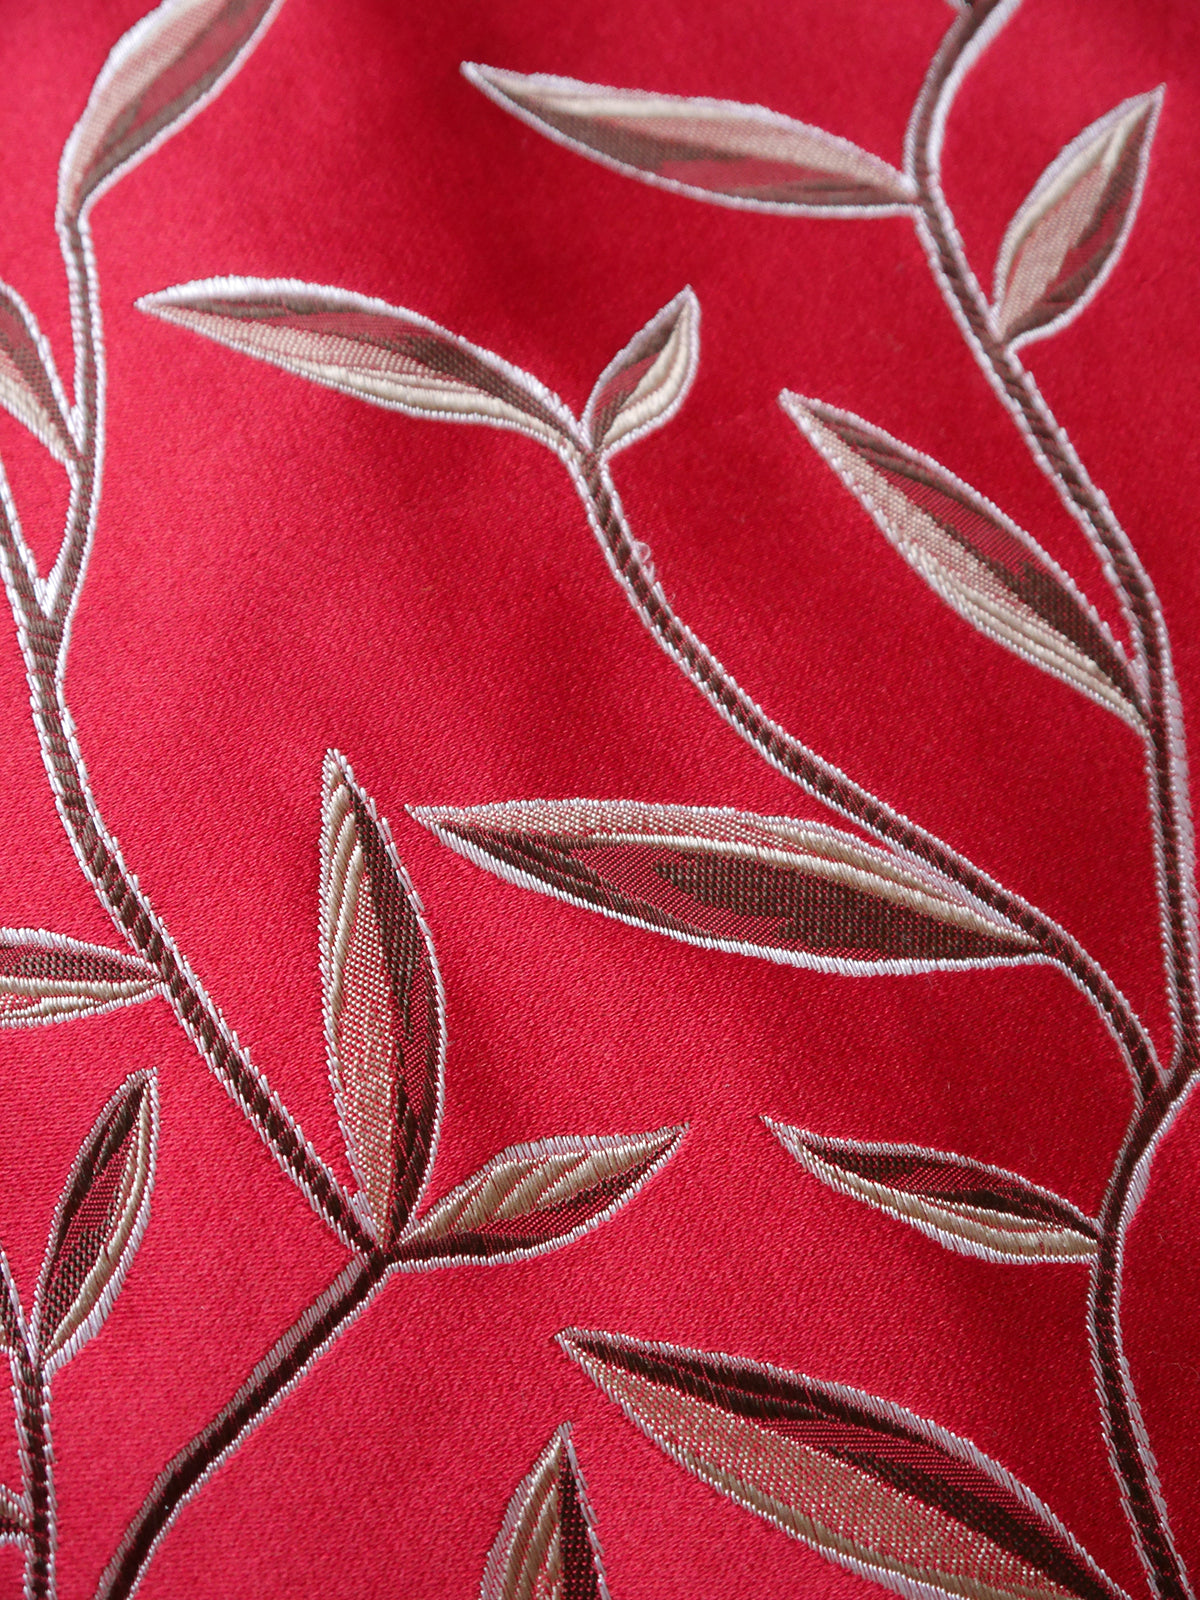 PRADA Spring 1997 1990s Vintage Chinoiserie Red Leaf Print Silk Dress